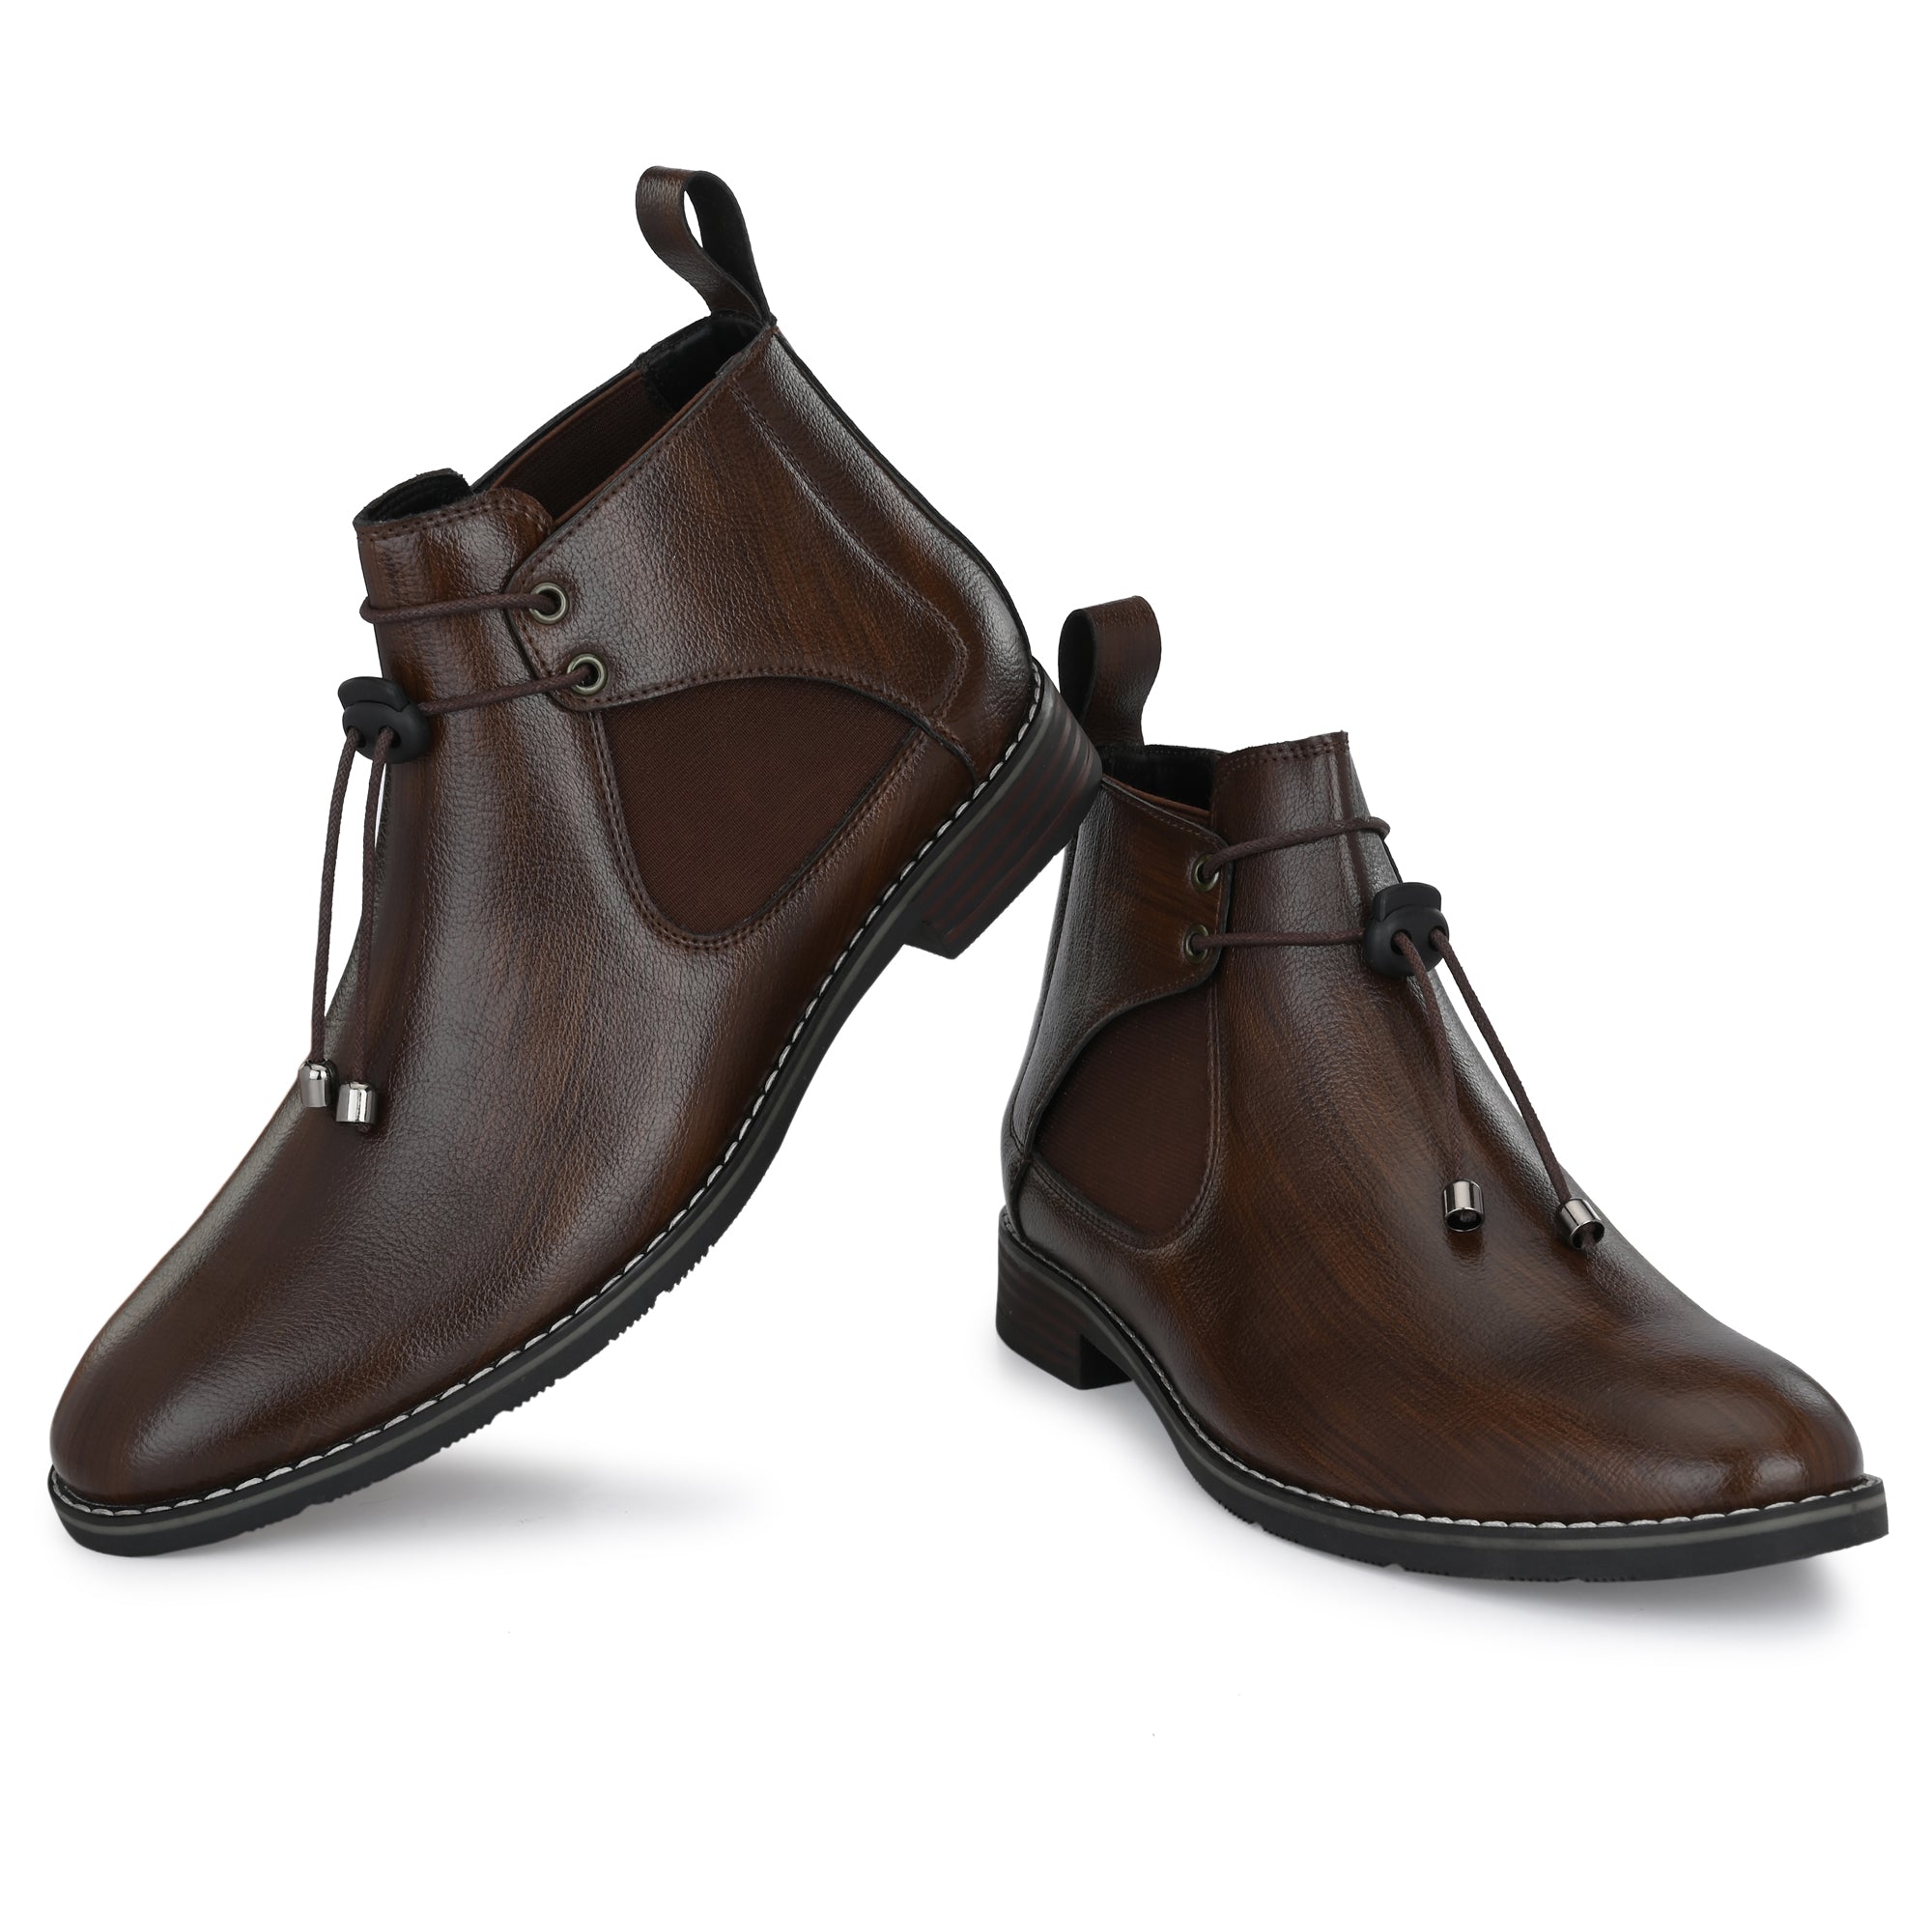 attitudist-brown-luxury-design-lace-up-chelsea-boot-for-men